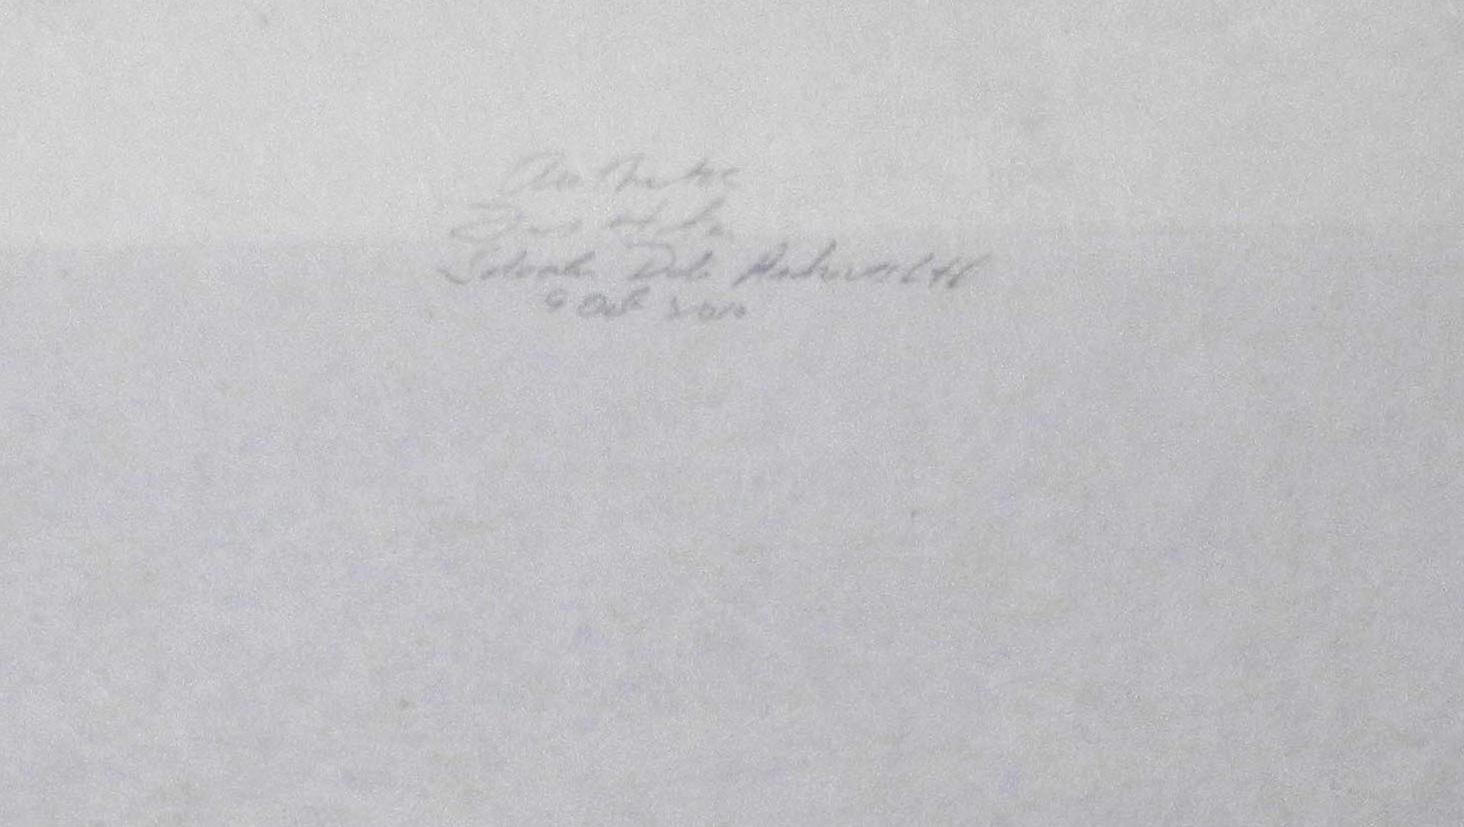 ARTIST: Salvador Dali

TITLE: Tauramachi Surrealiste The Piano In The Snow

MEDIUM: Etching

SIGNED: Hand Signed 

PUBLISHER: Pierre Argillet, Paris 

EDITION NUMBER: L/C

MEASUREMENTS: 25.7